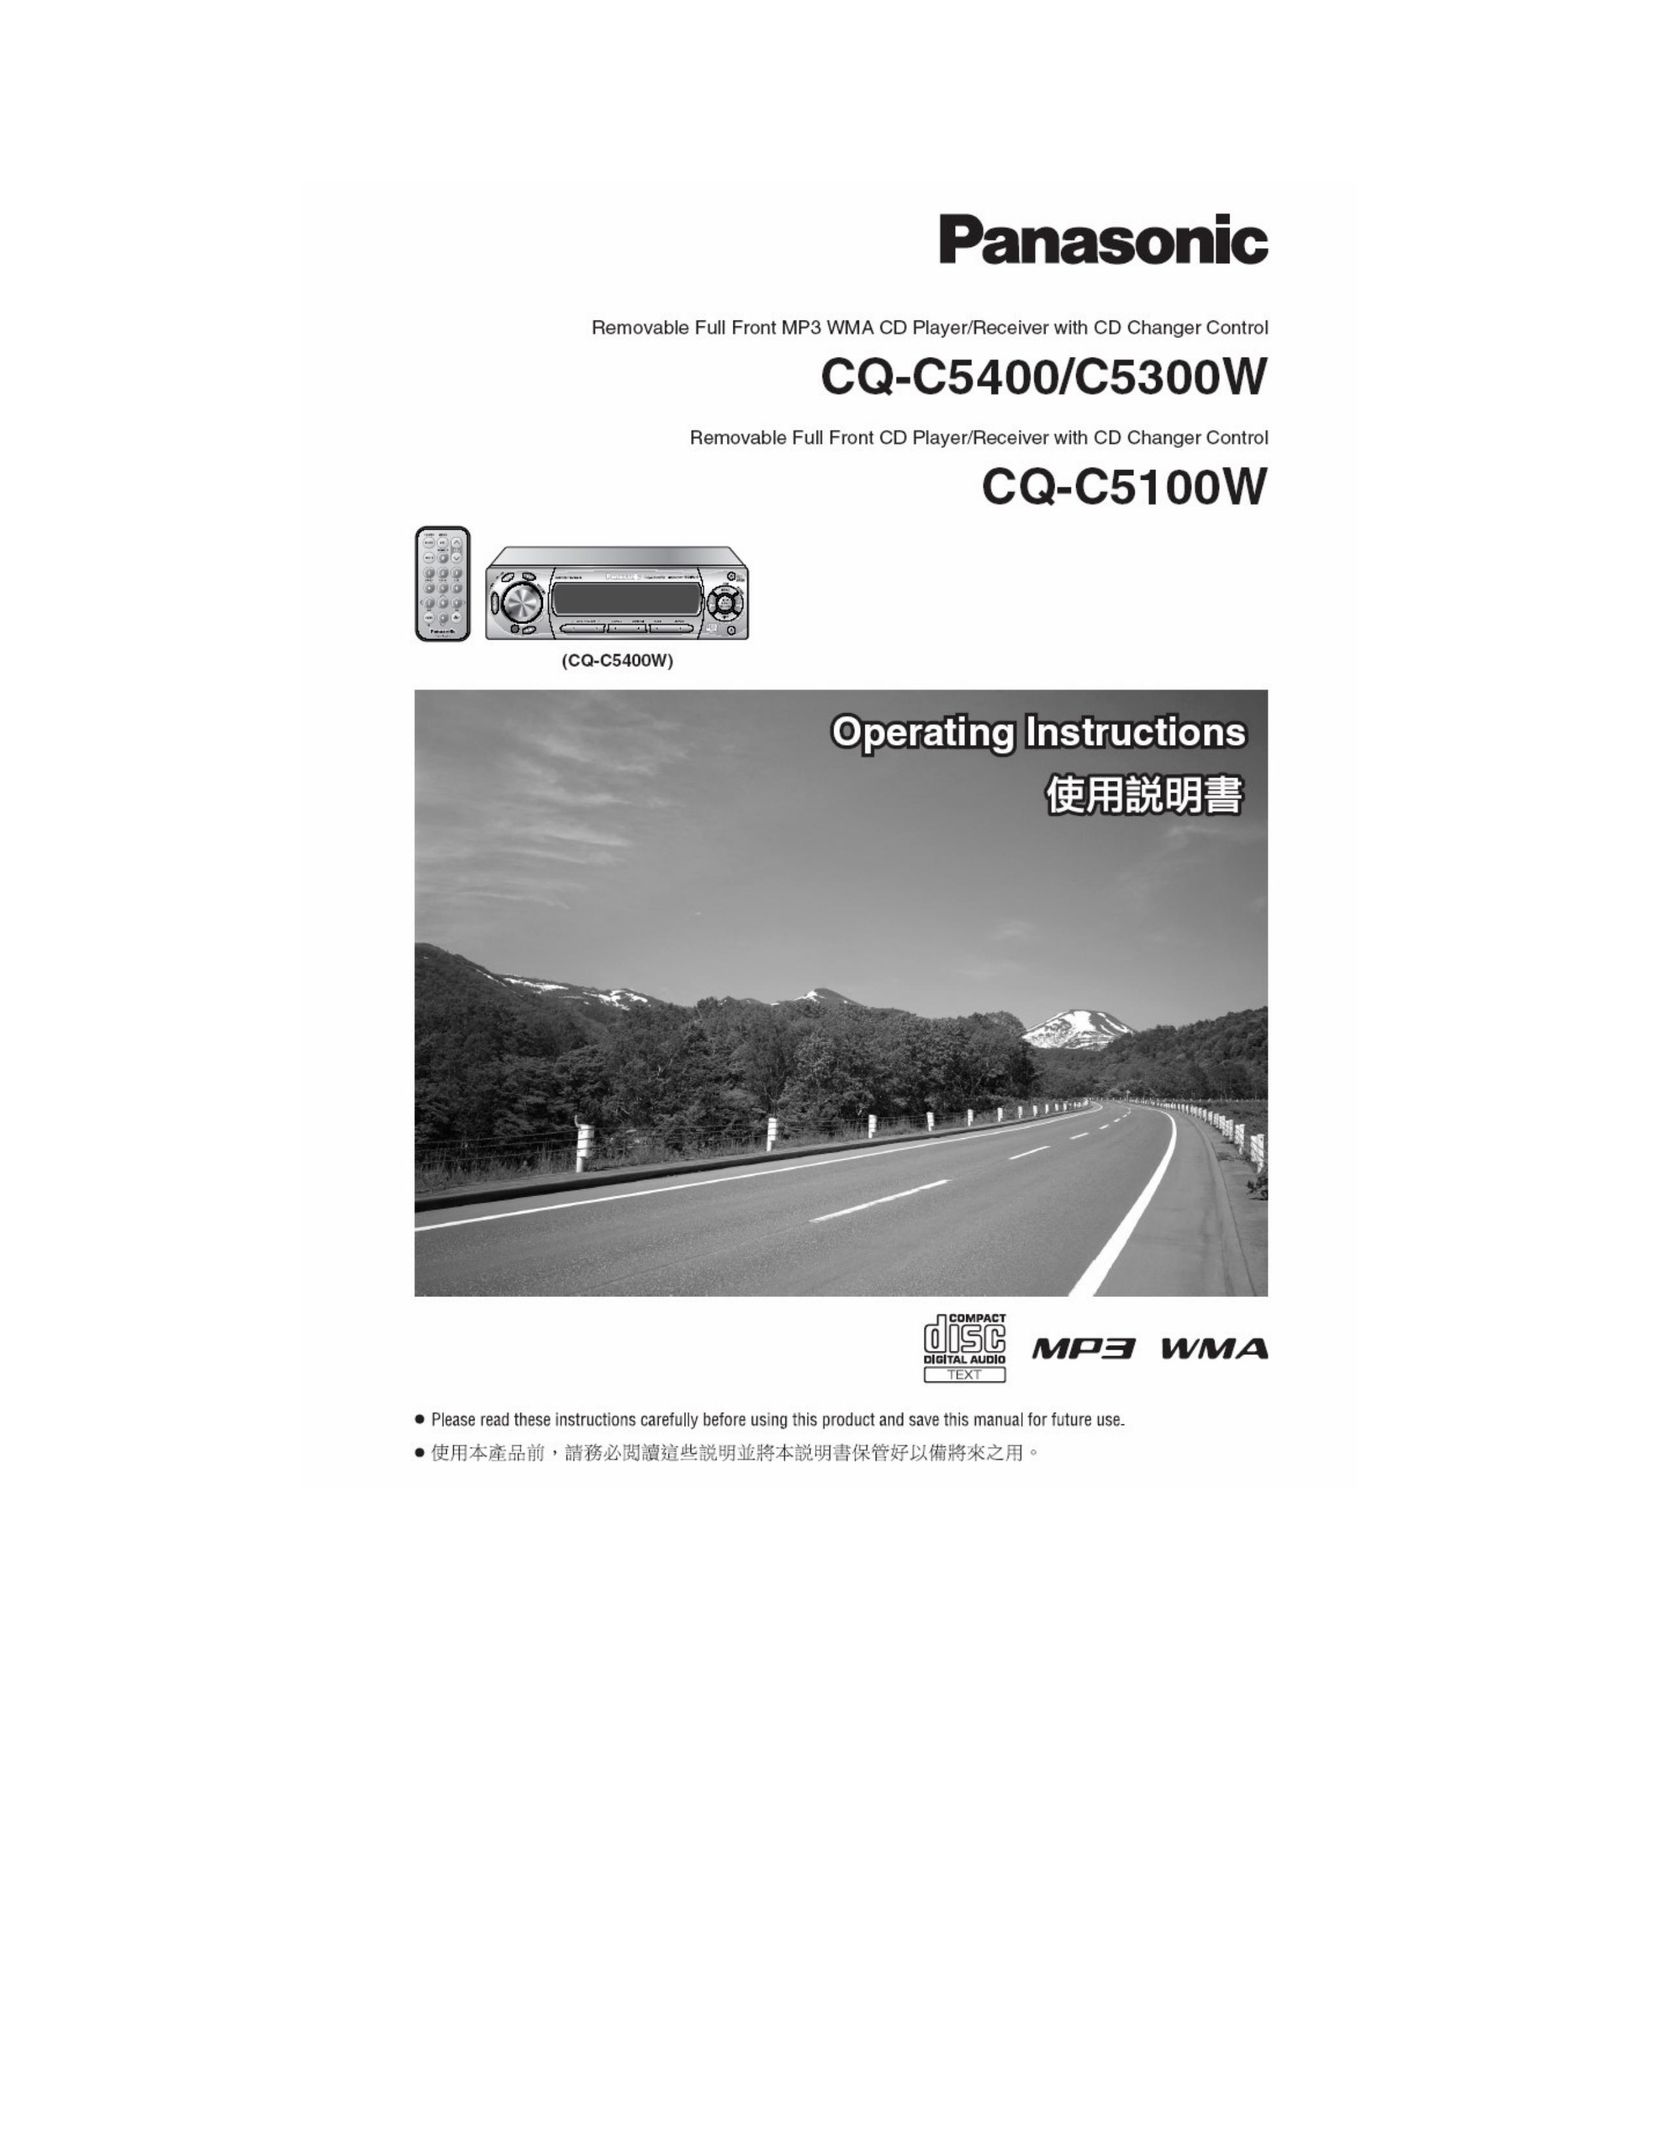 Panasonic CQ-C5400 Portable CD Player User Manual